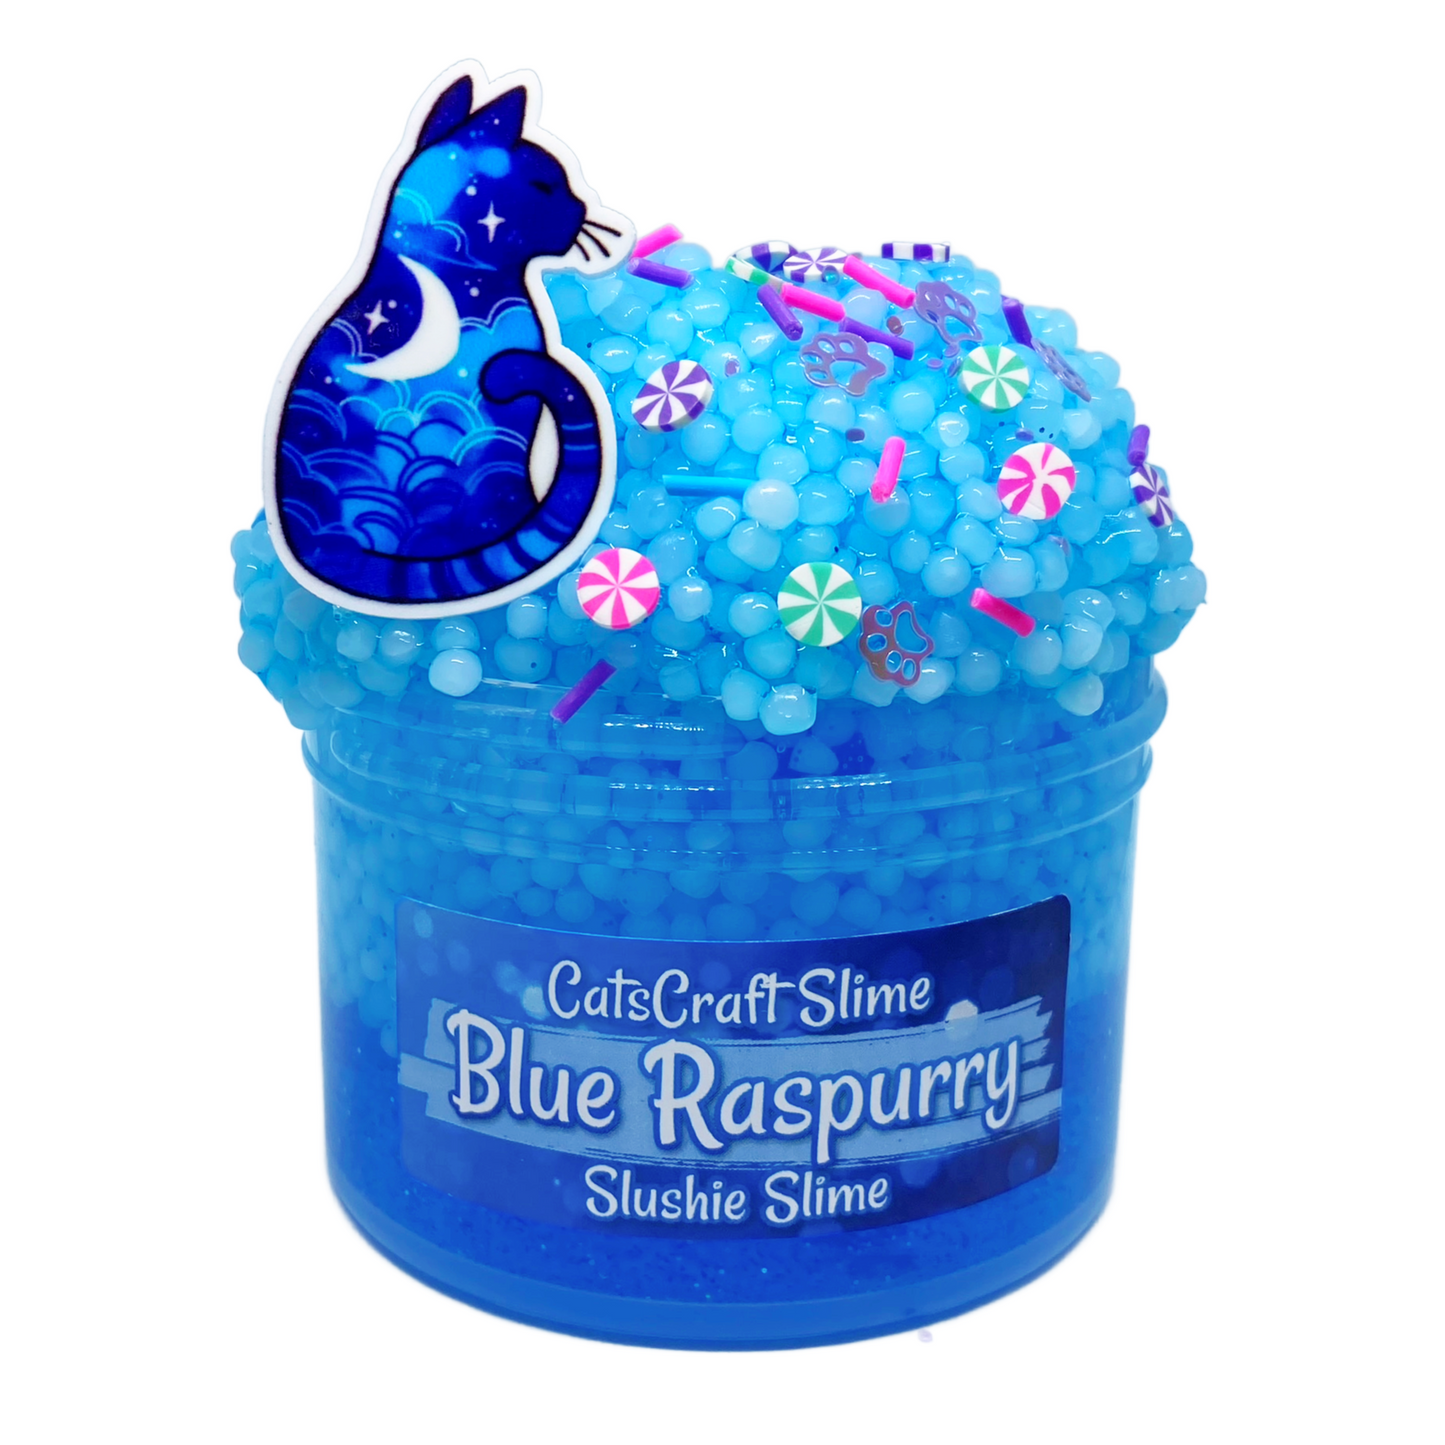 Slushie Slime "Blue Raspurry" SCENTED blue crystal clear slushee bead crunchy ASMR with cat charm